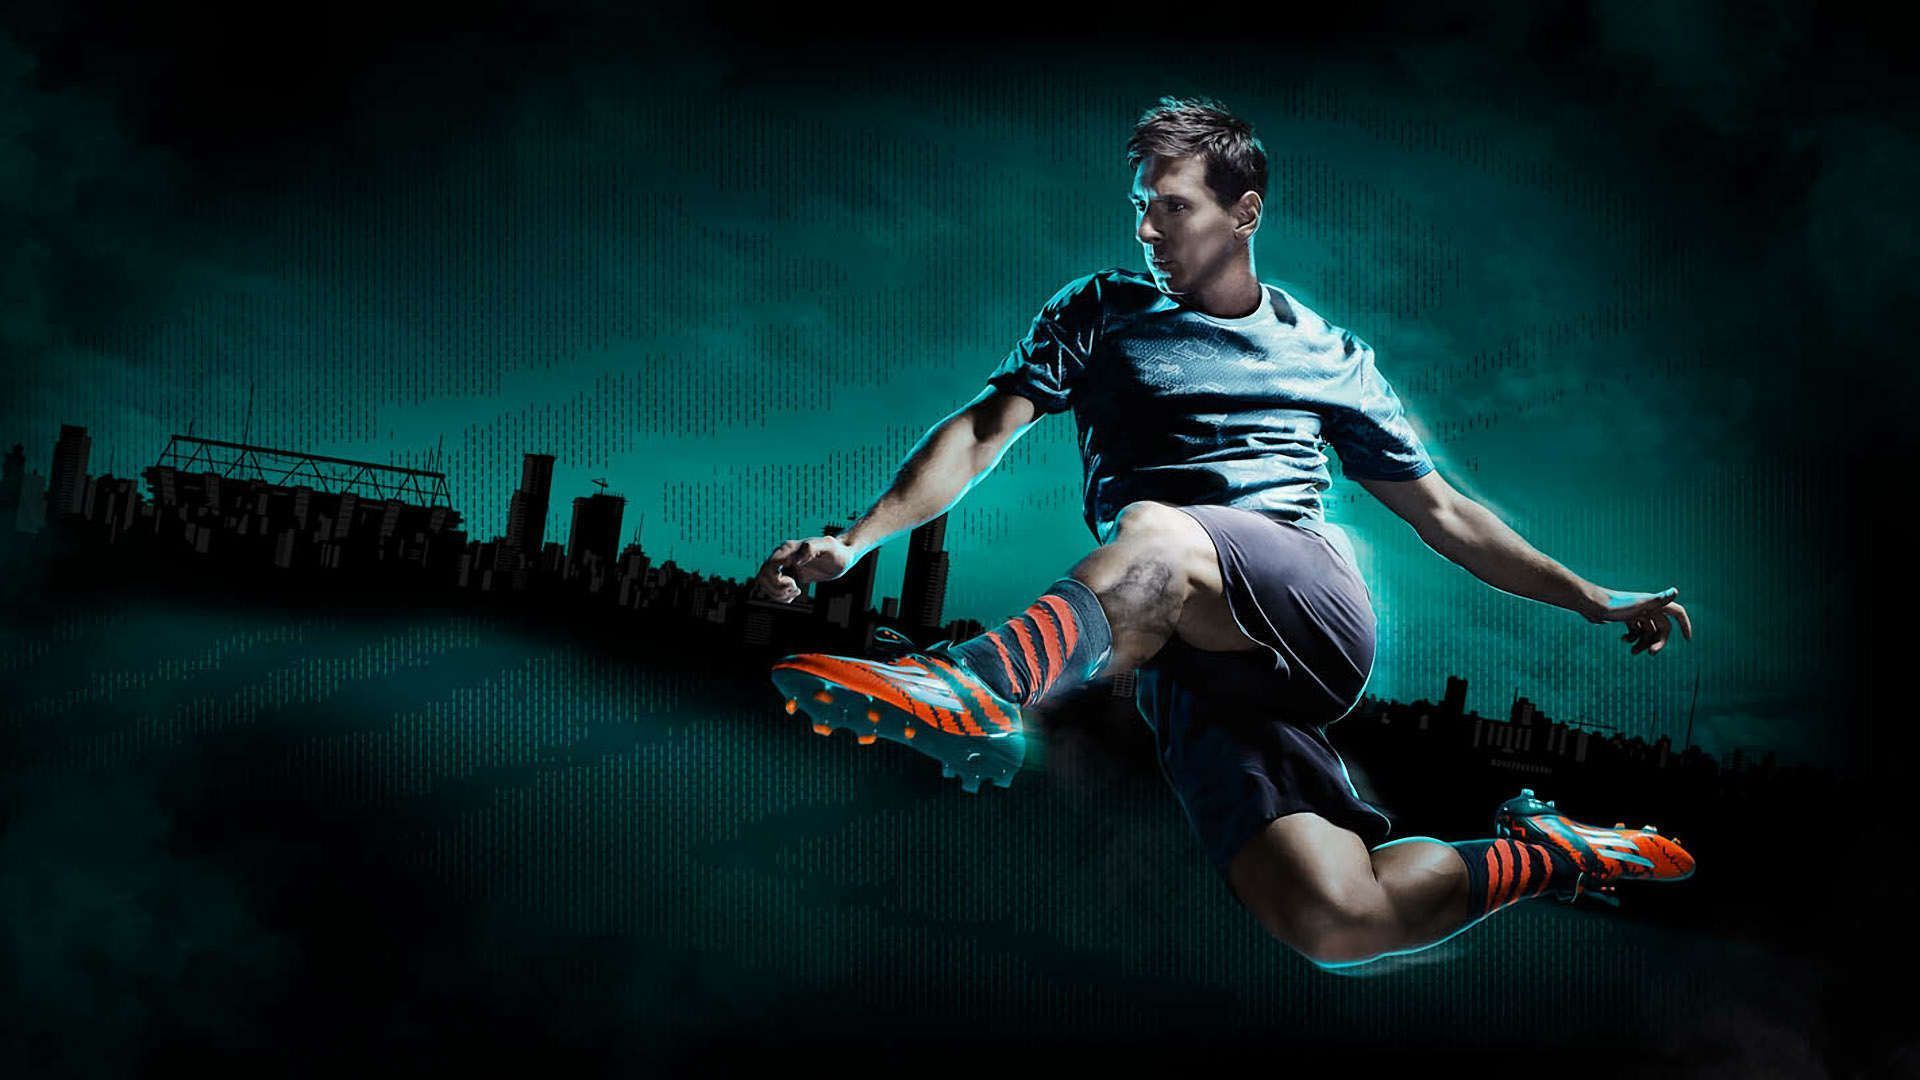 Leo-Messi-2015-Adidas-Mirosar10-Wallpaper-Download.jpg